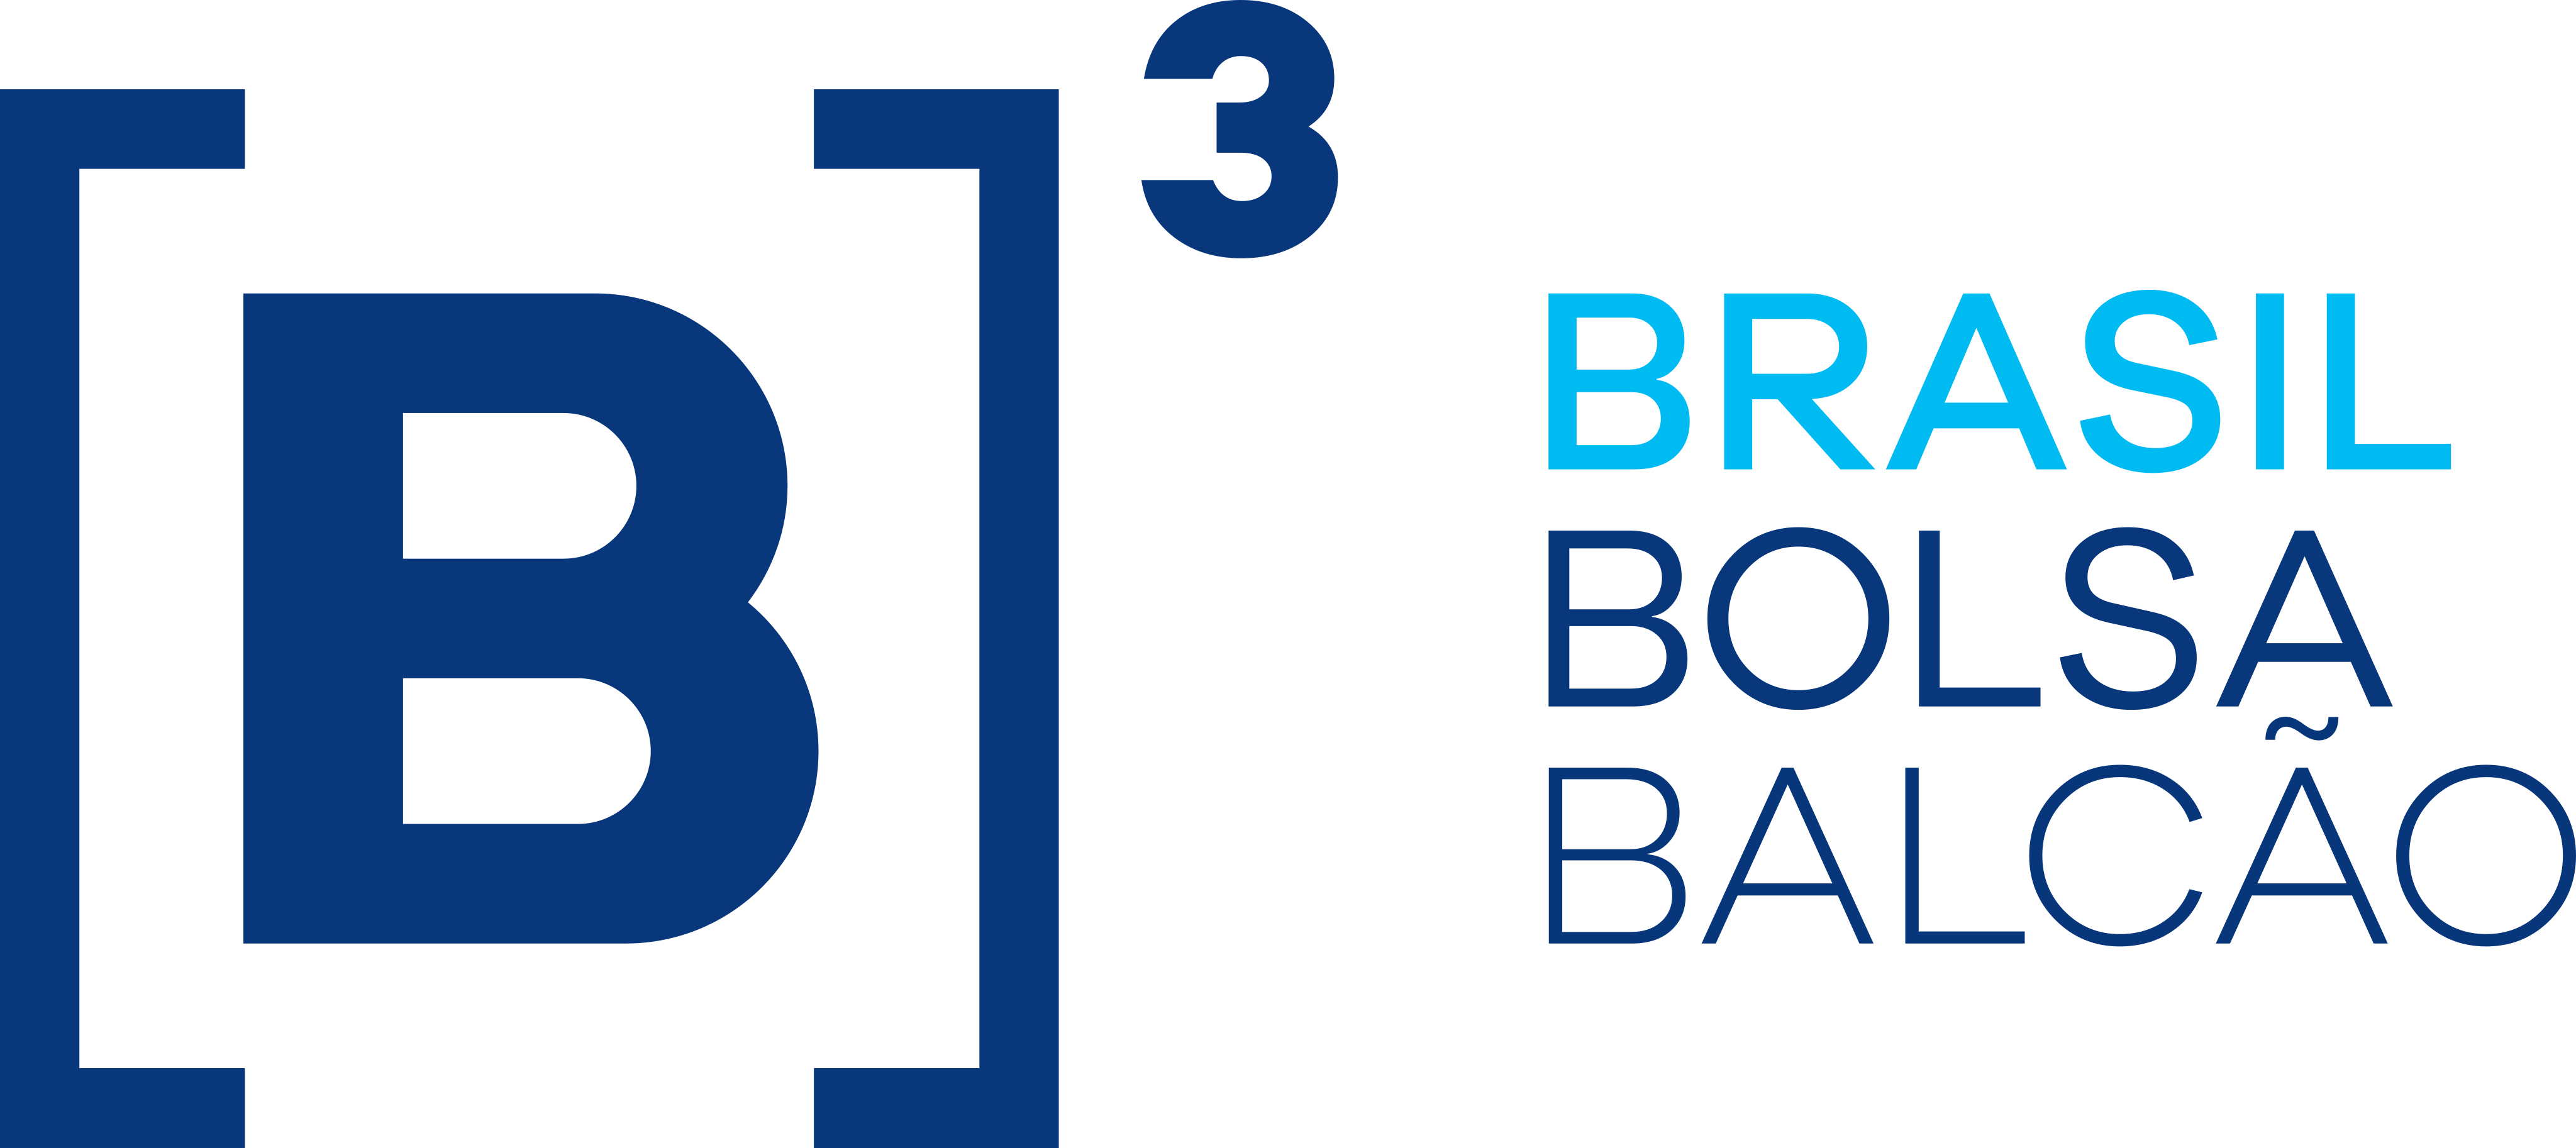 b3 logo.